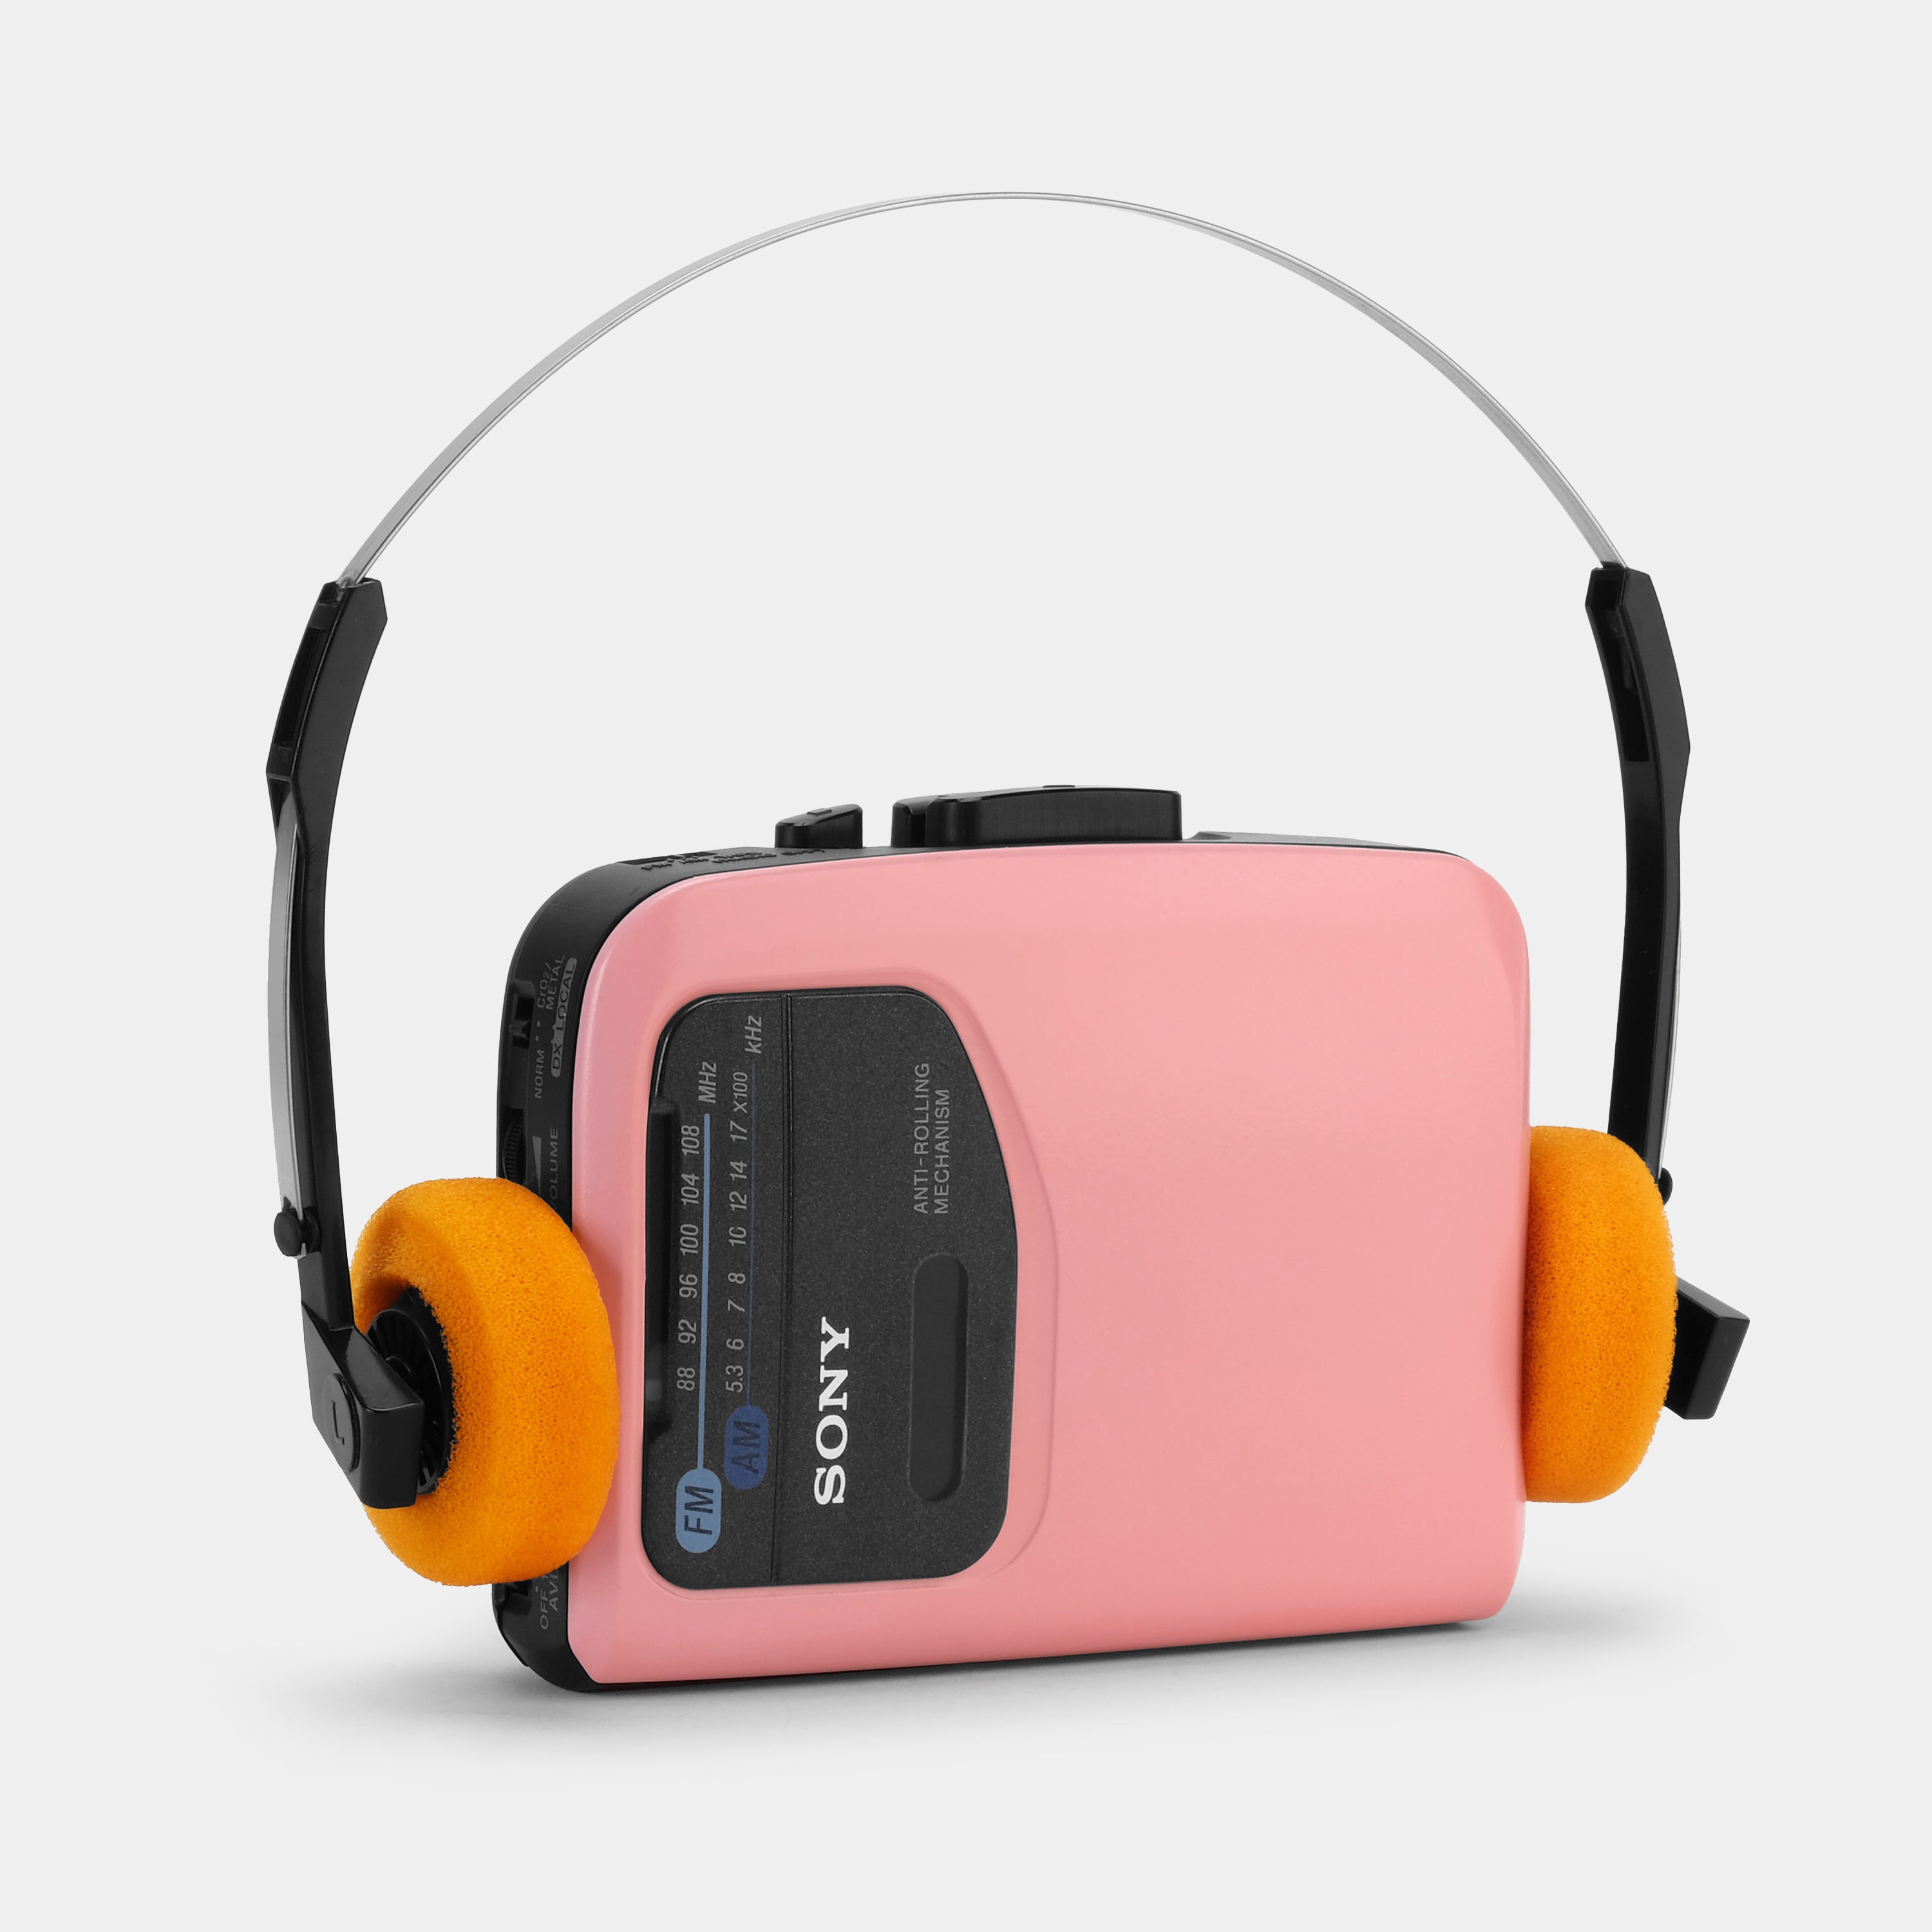 Sony Walkman WM-FX101 AM/FM Pink Portable Cassette Player